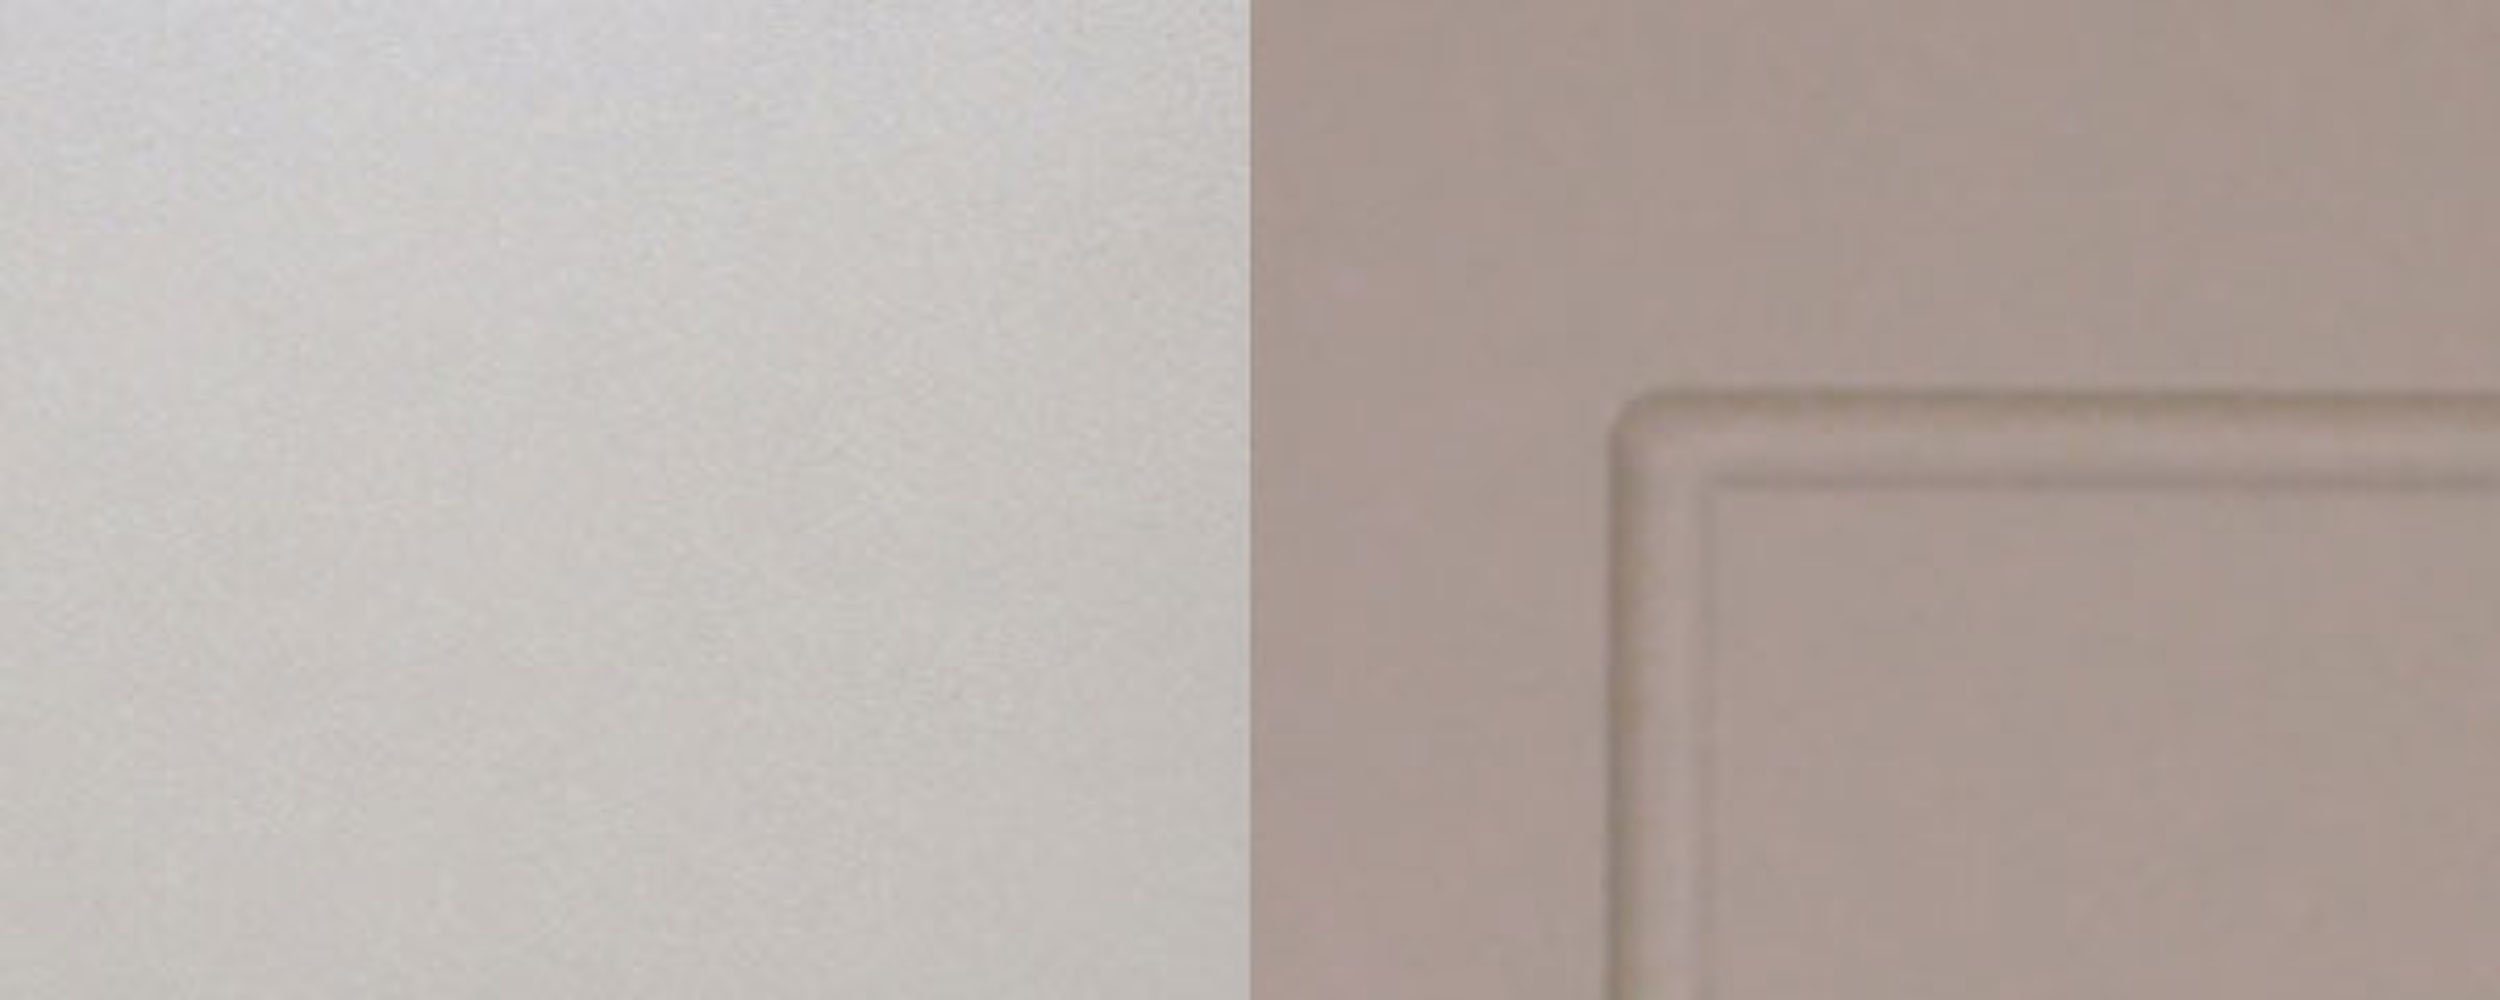 Feldmann-Wohnen Klapphängeschrank Kvantum 2-türig Front- wählbar und Korpusfarbe beige 60cm (Kvantum) matt